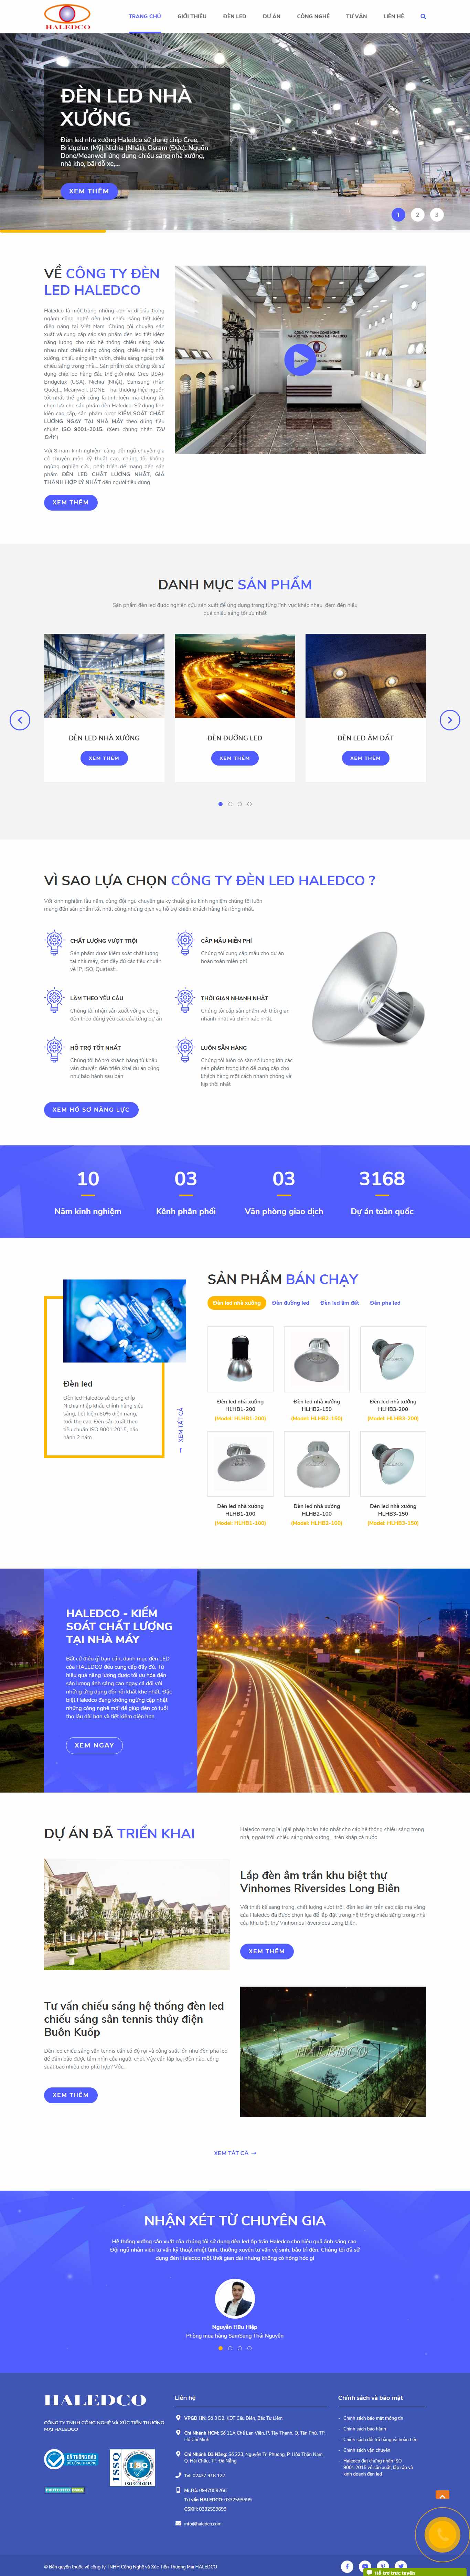 Thiết kế Website quảng cáo đèn led - haledco.com